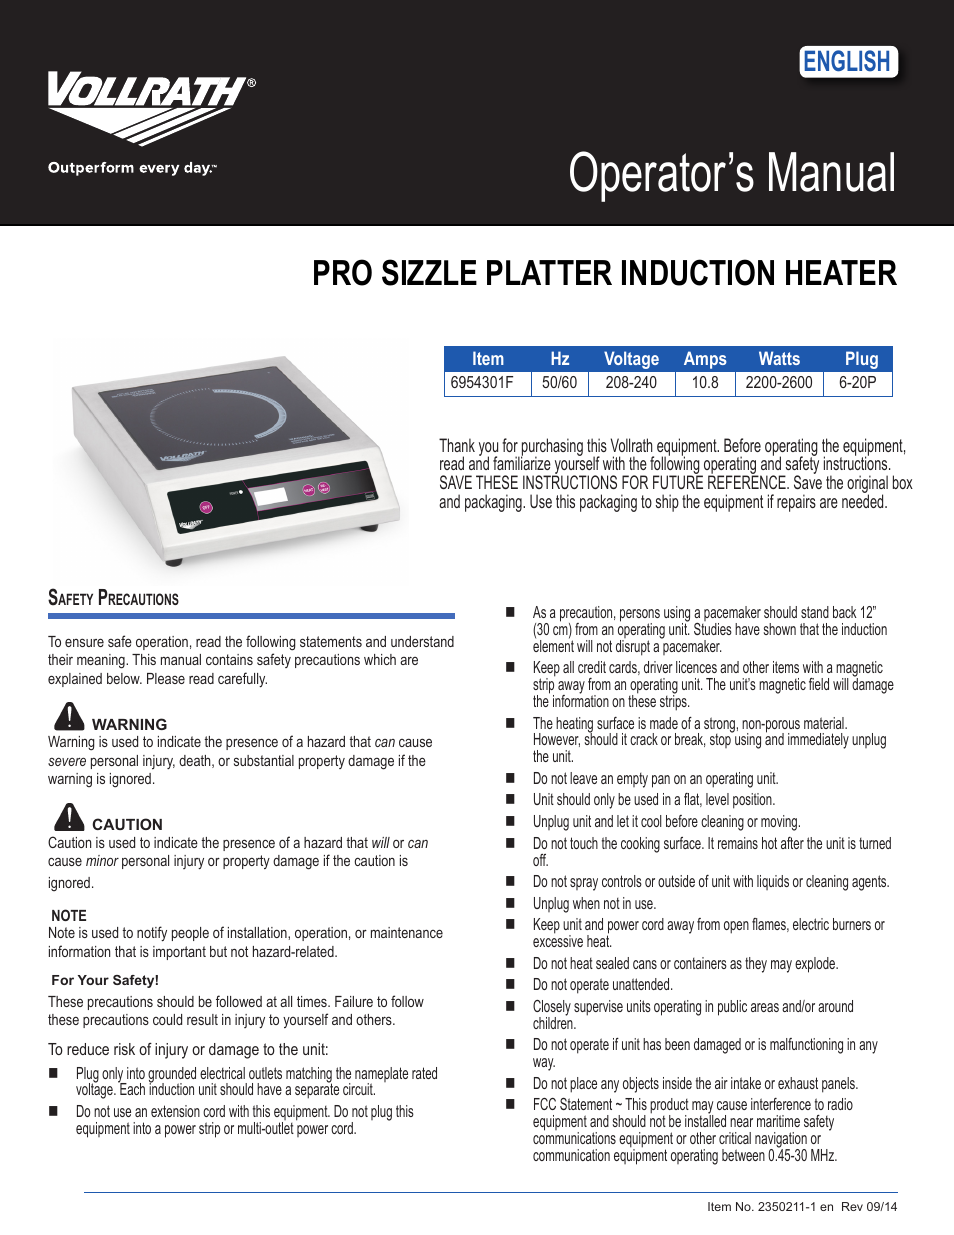 Professional Series 2200 - 2600 Watt Sizzle Platter Induction Heaters